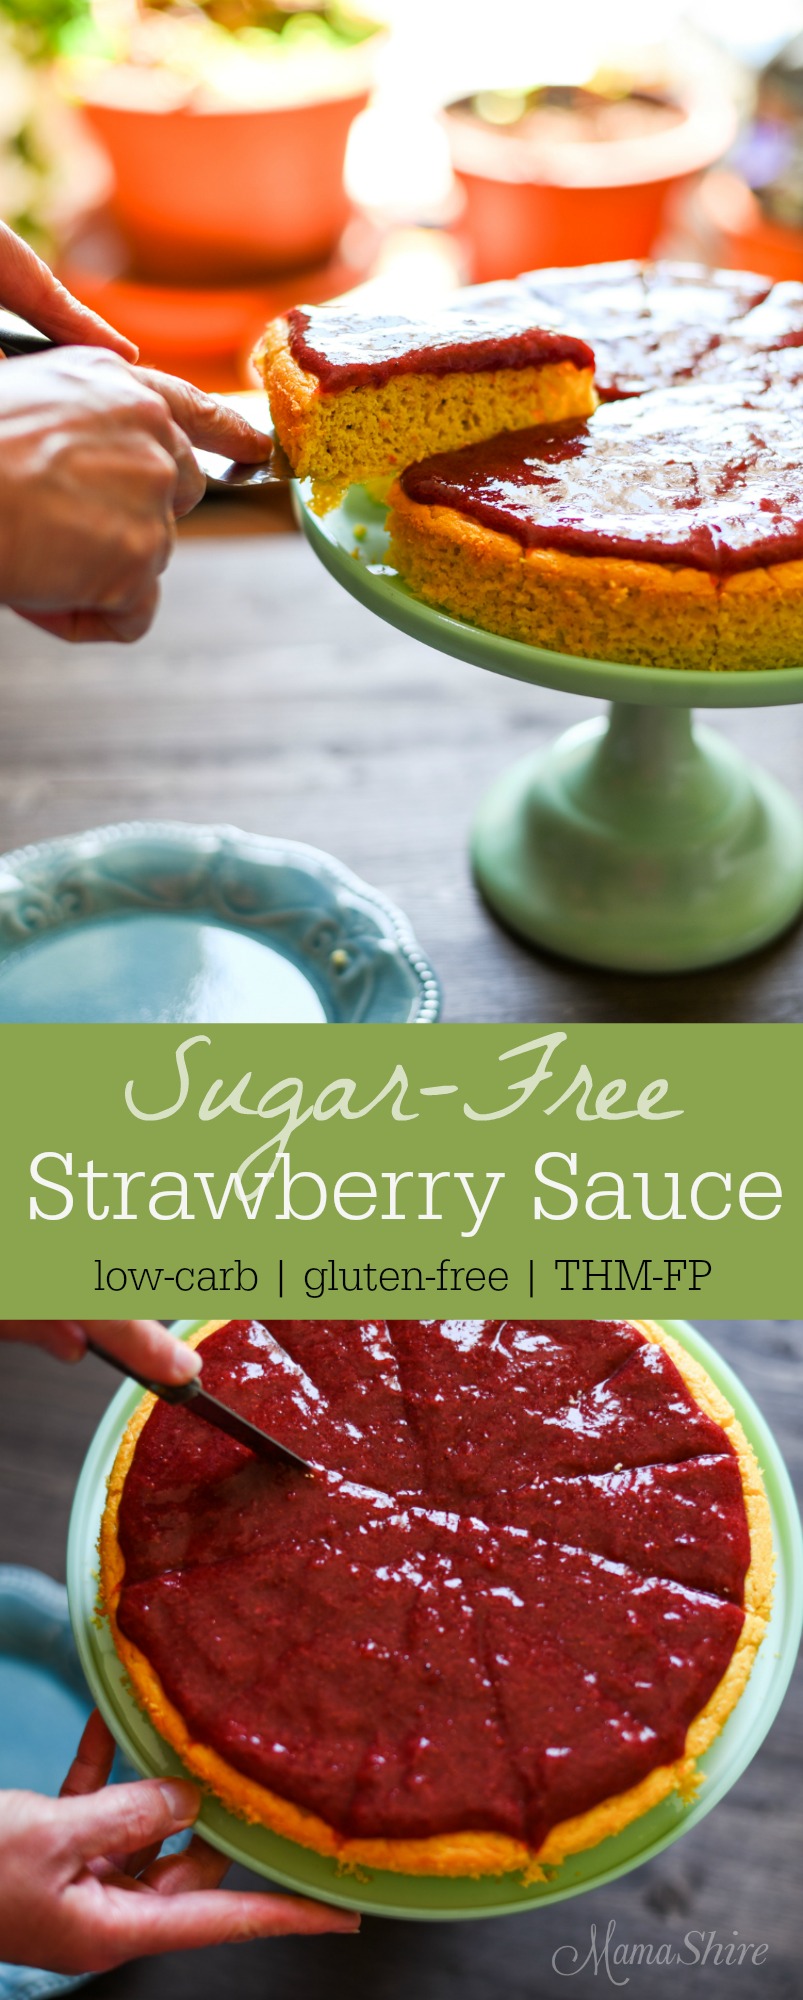 Sugar-free Strawberry Sauce - low-carb, gluten-free, THM-FP